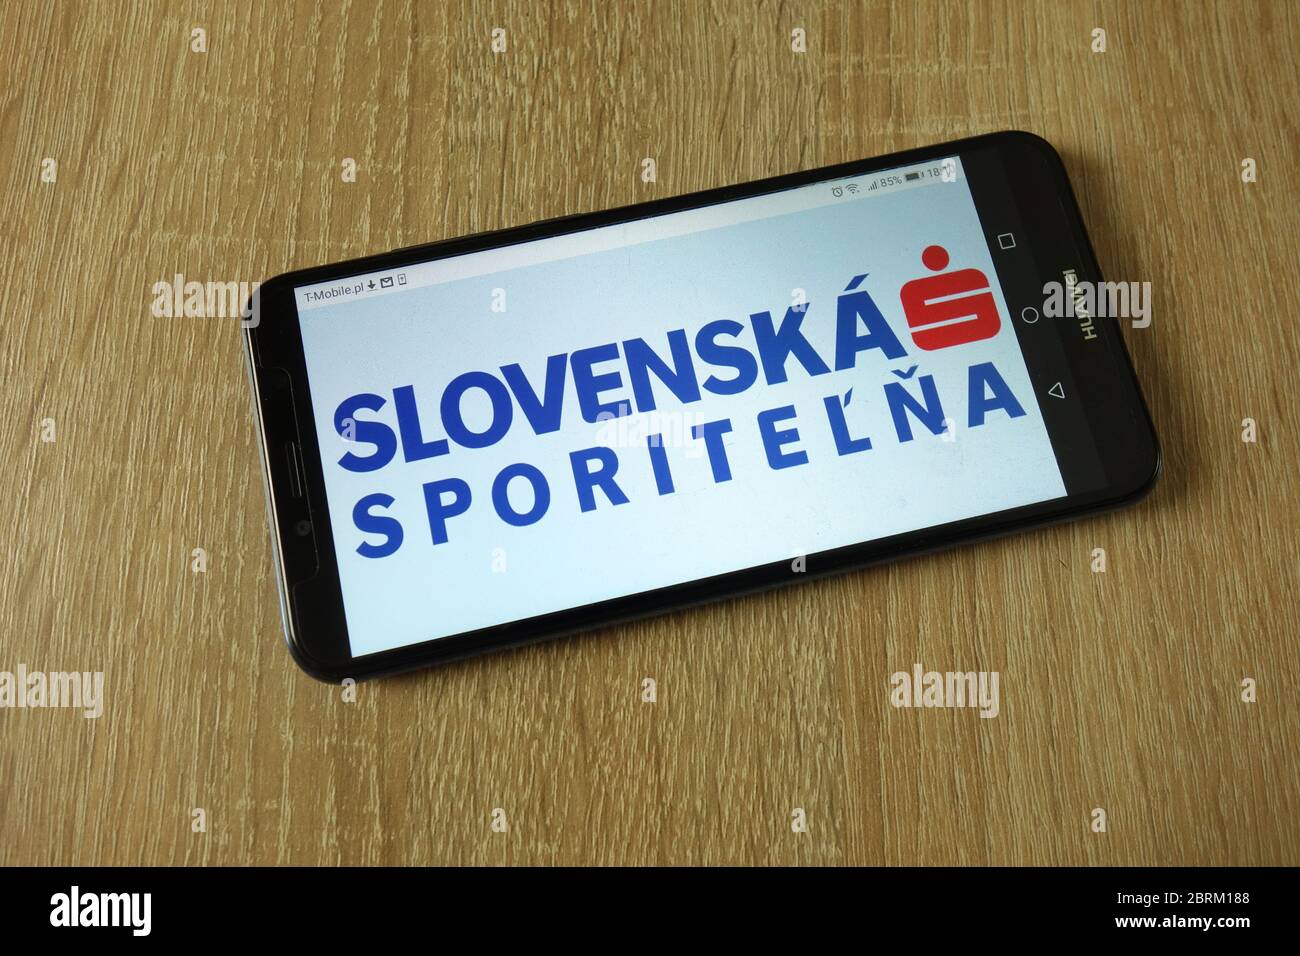 Slovenska sporitelna logo displayed on smartphone Stock Photo